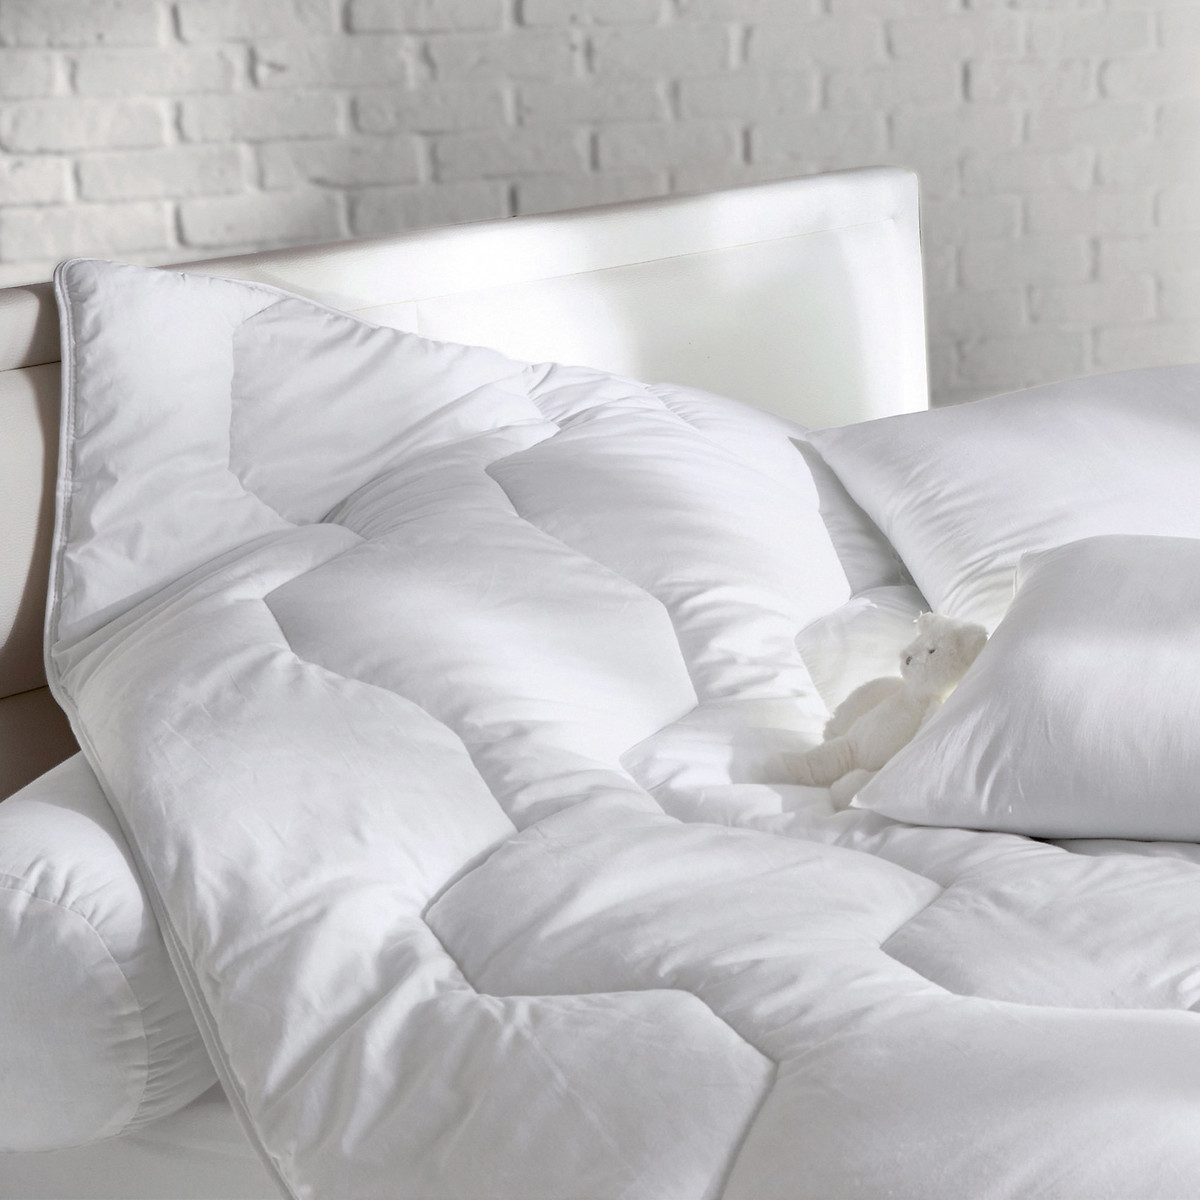 Одеяло LA REDOUTE INTERIEURS Одеяло LEGERE - с пропиткой от комаров 260 x 240 см белый, размер 260 x 240 см - фото 1